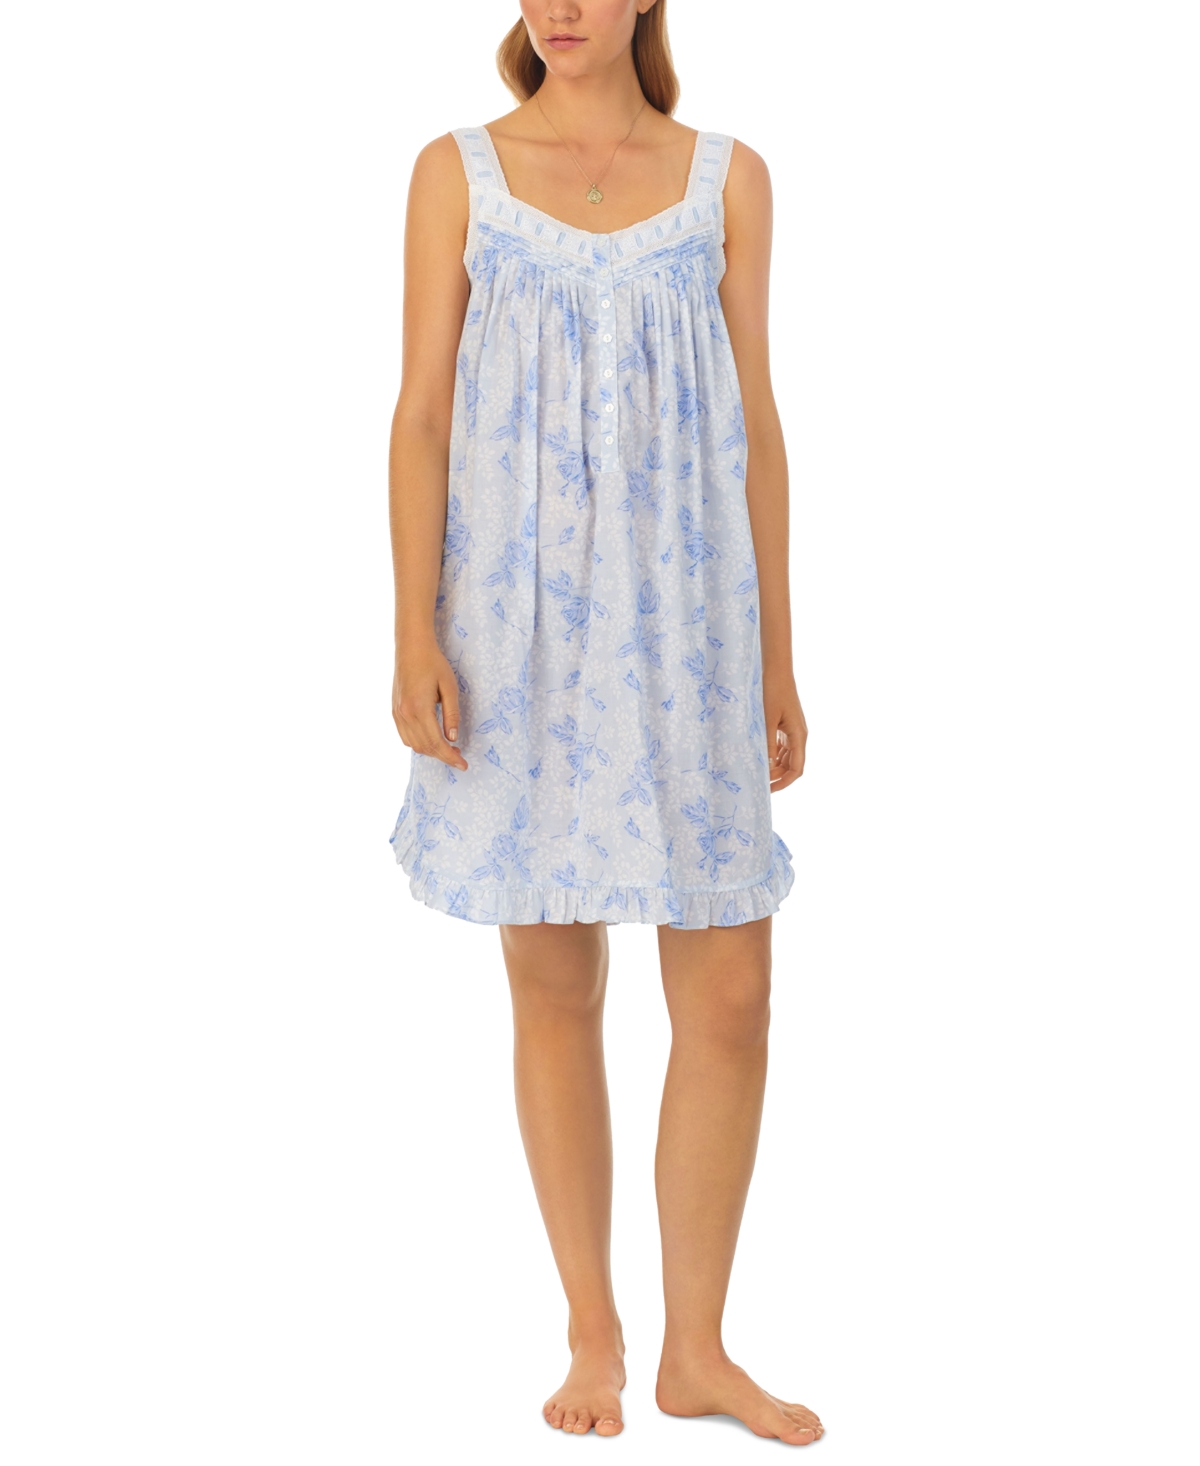 Women's Cotton Printed Sleeveless Nightgown - Blue Print